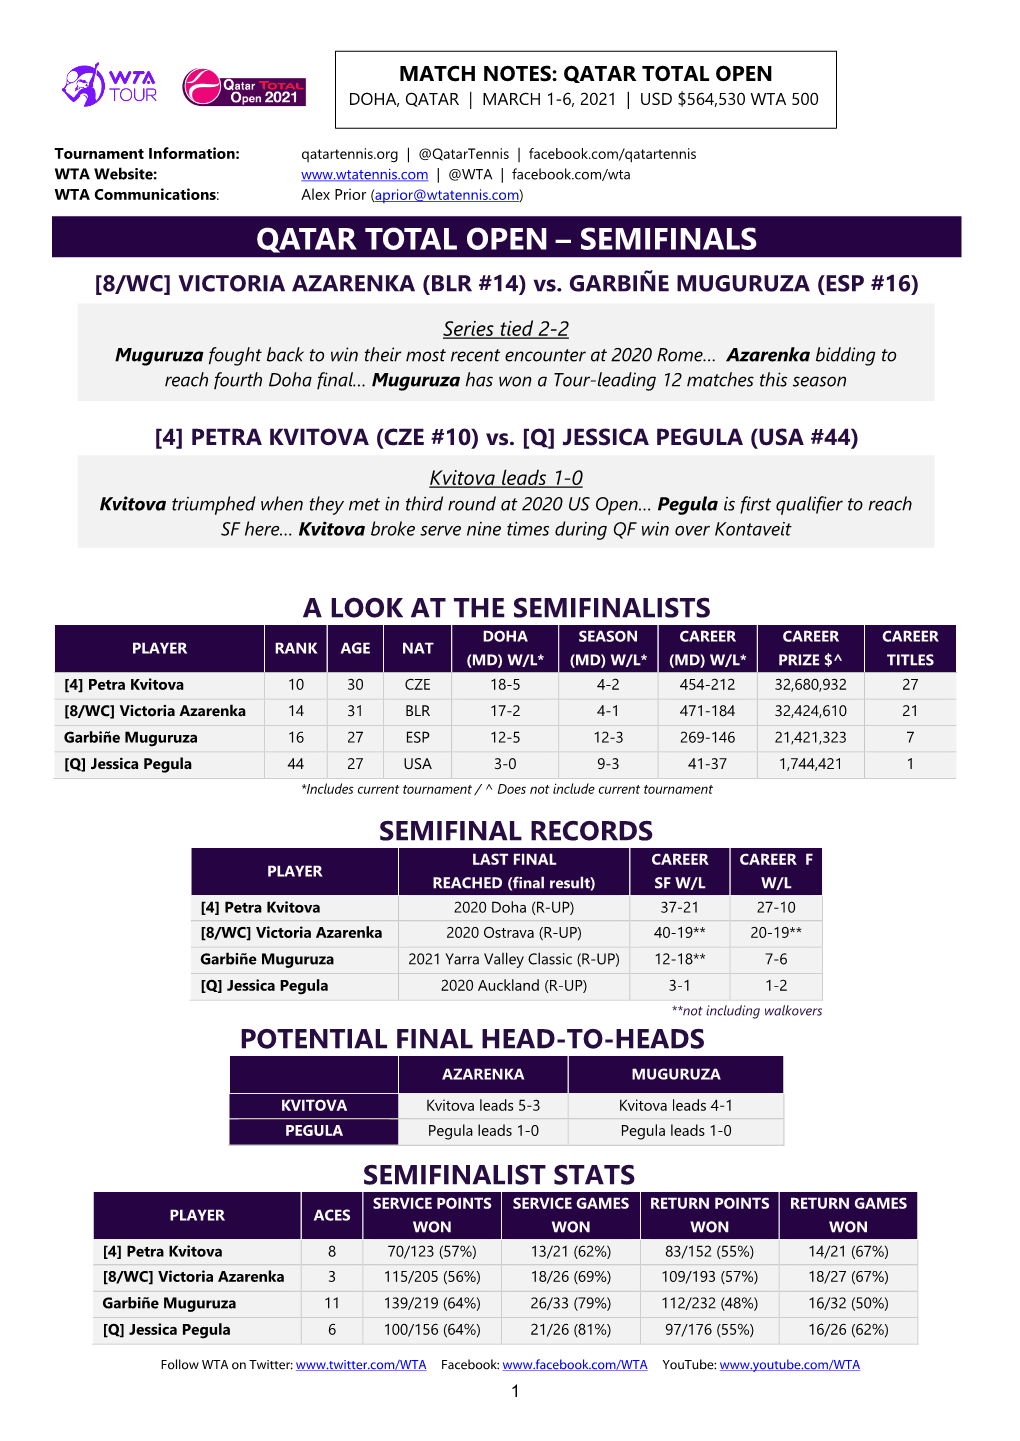 Qatar Total Open – Semifinals